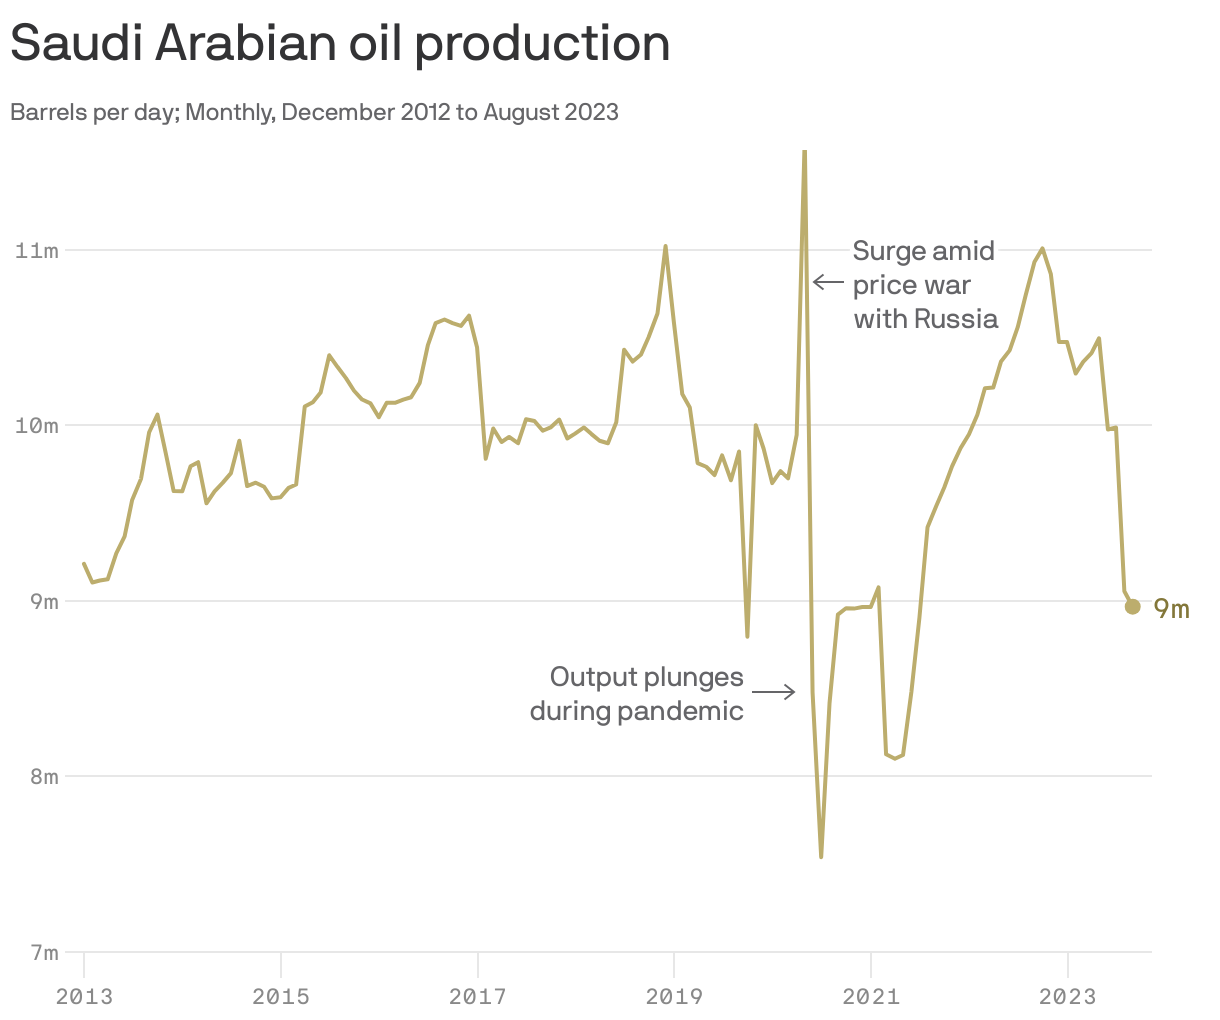 Saudi Arabian oil production